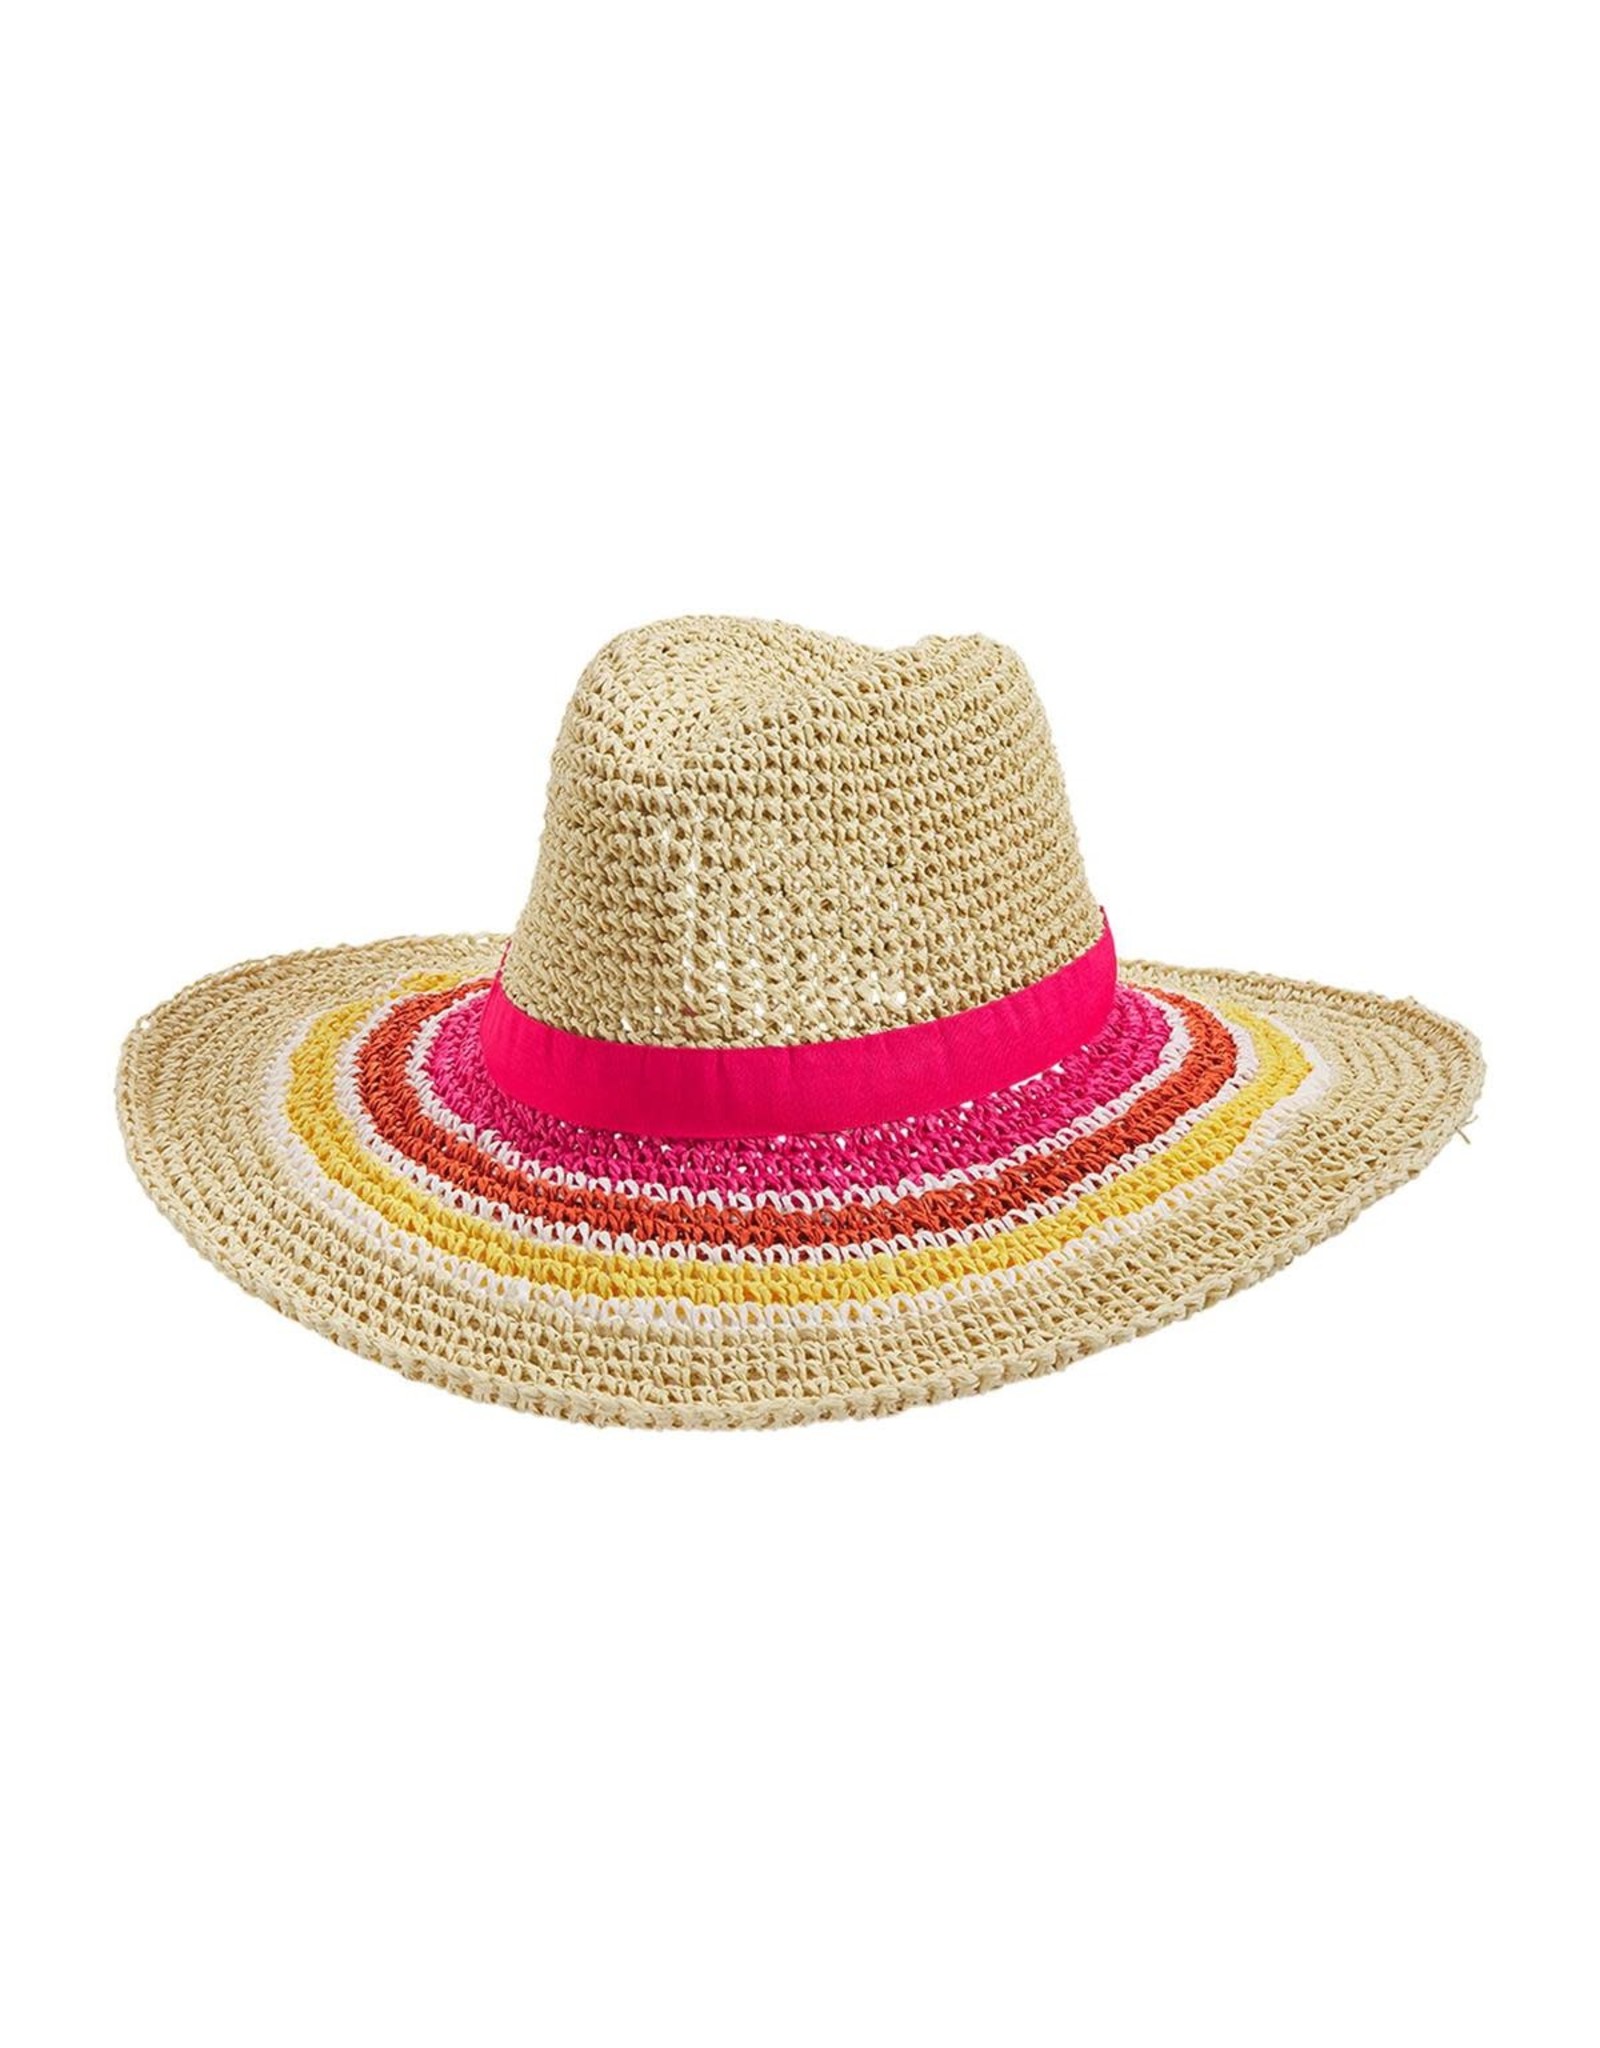 Mud Pie Women's Hats - Striped Straw Fedora - Pink - Digs N Gifts